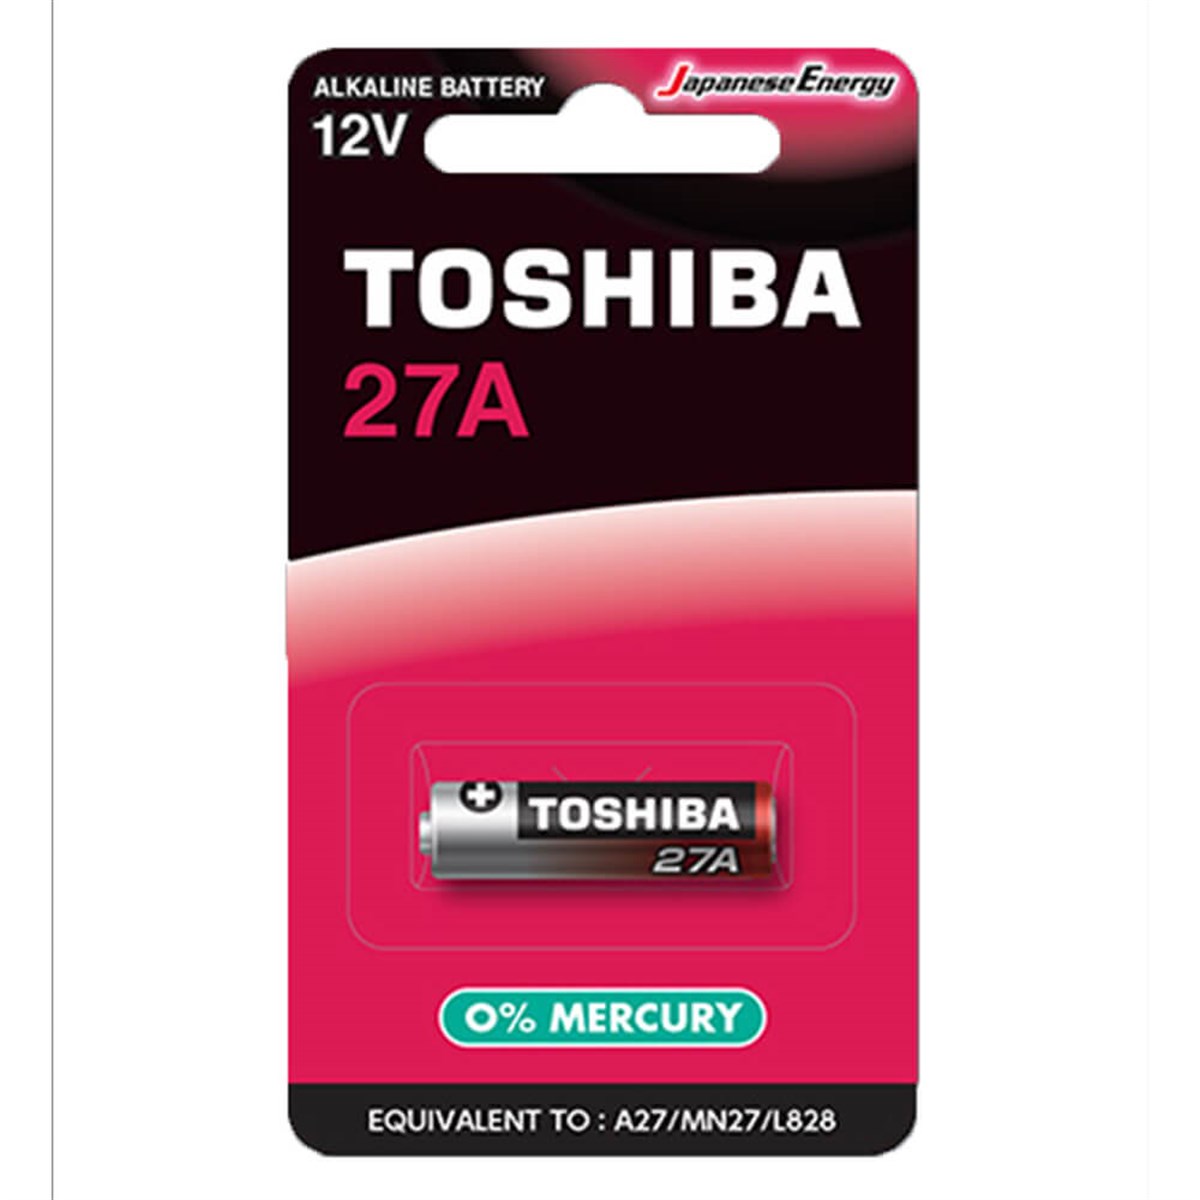 Toshiba 27A Alkalin Pil